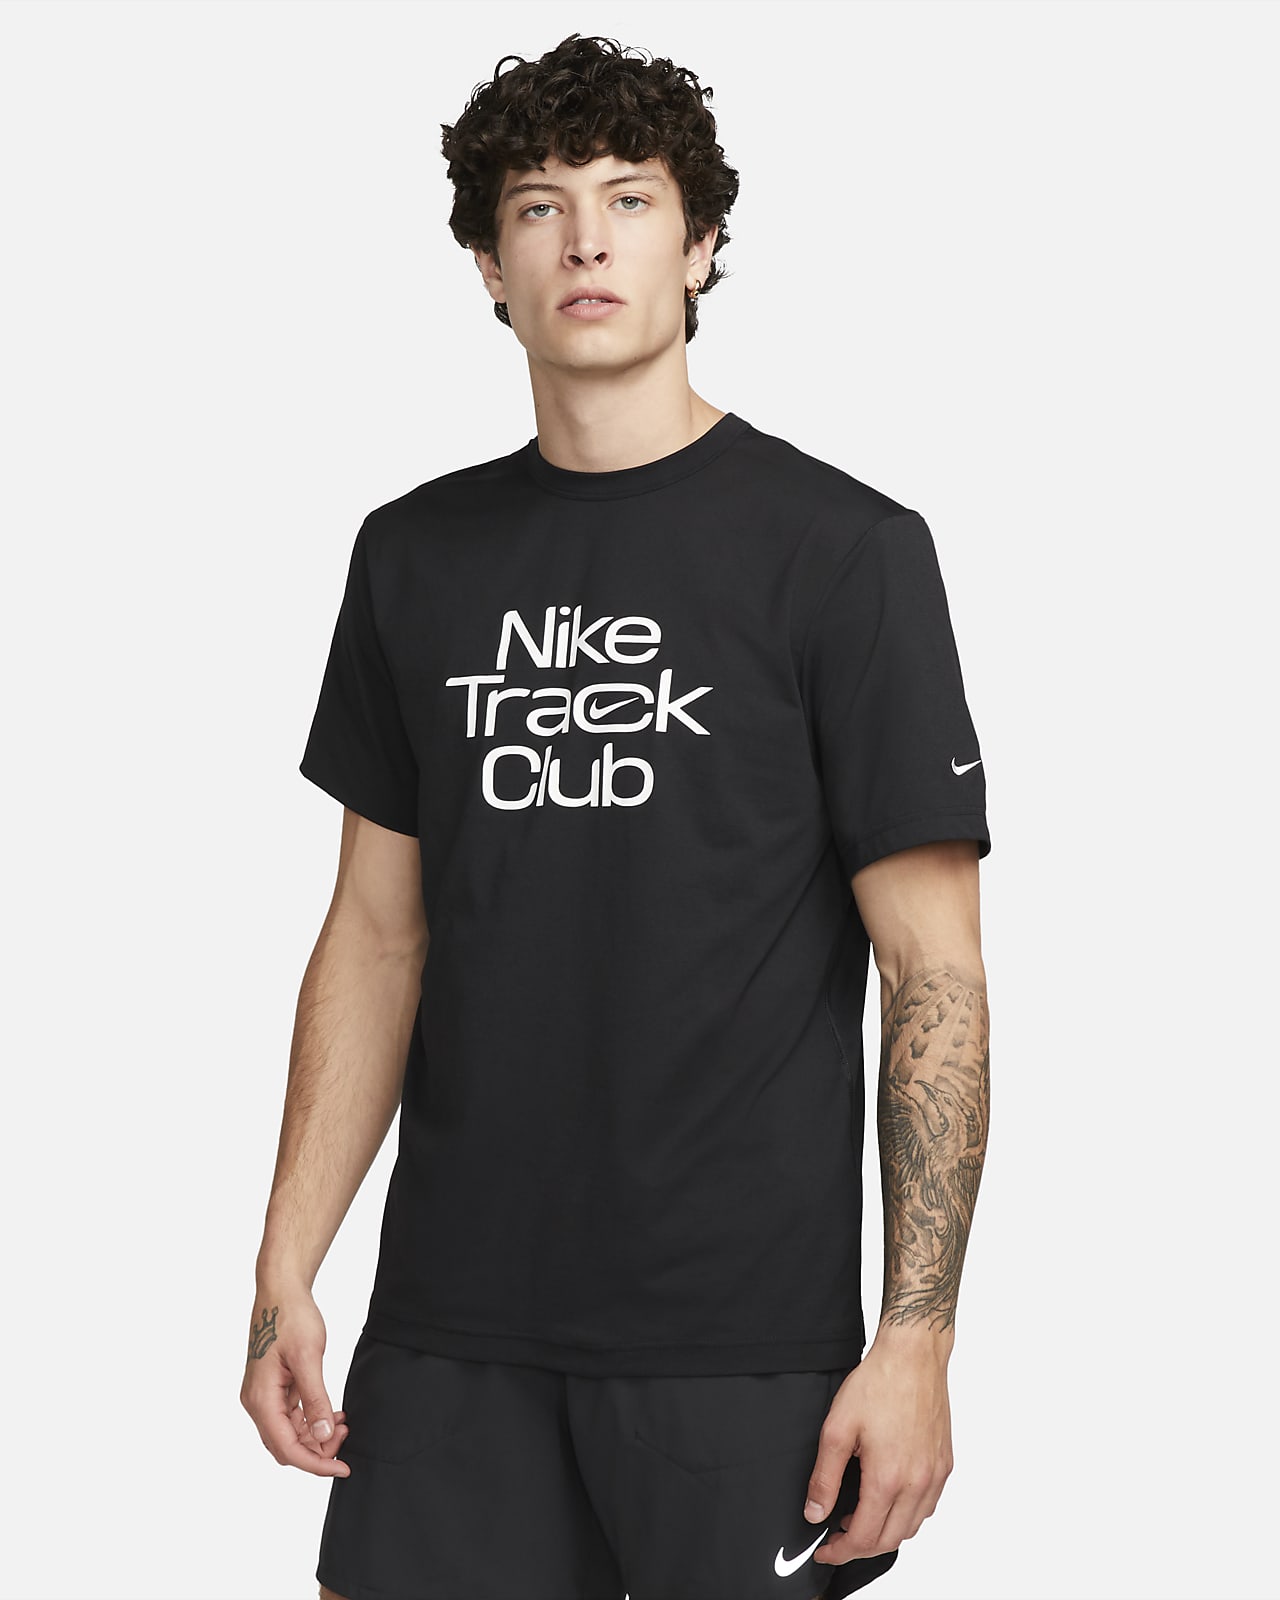 Pánské běžecké tričko Dri-FIT Nike Track Club s krátkým rukávem